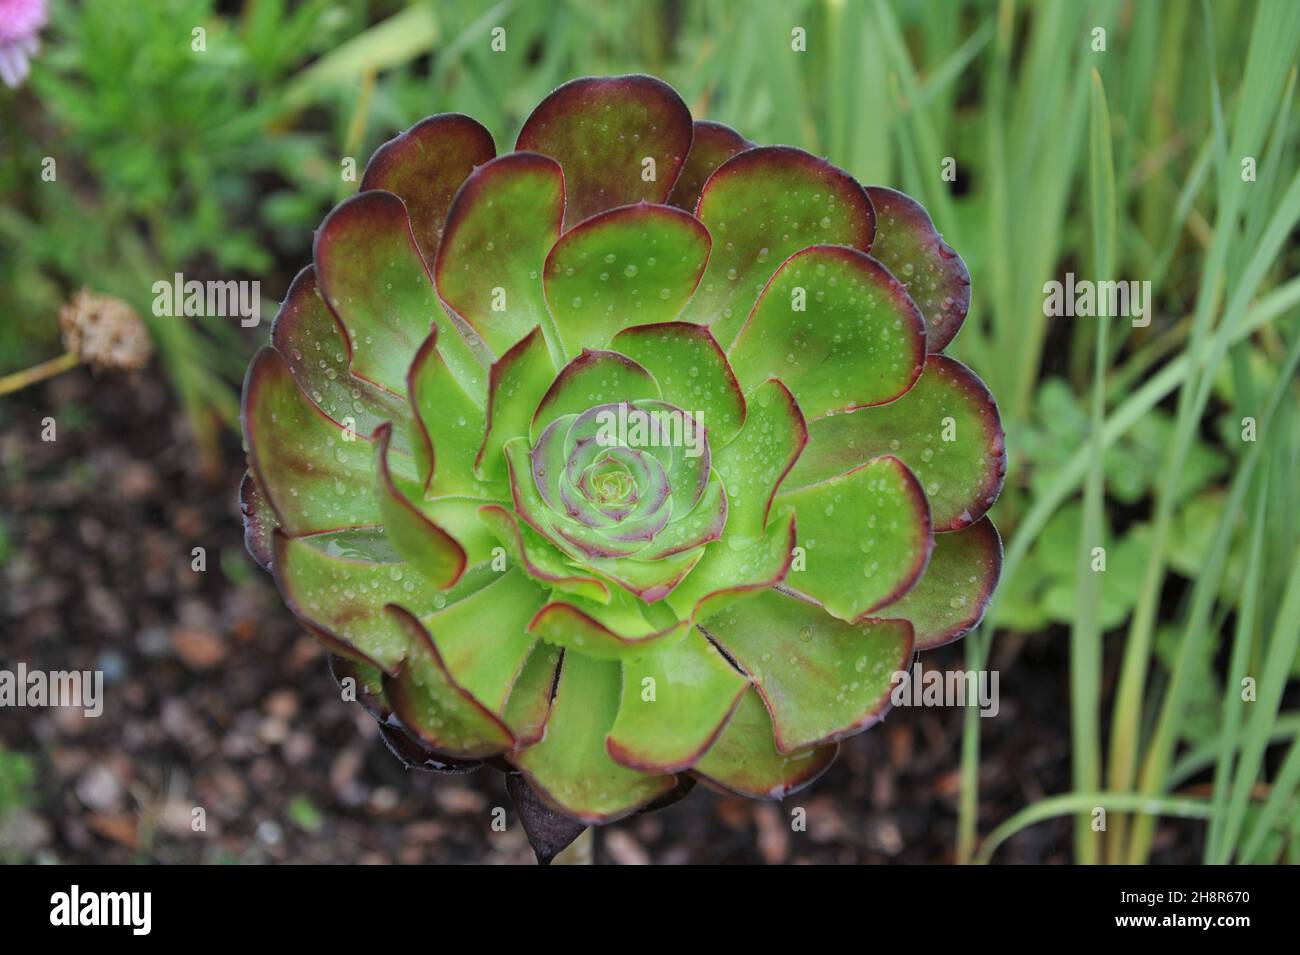 Aeonium Voodoo grows in a garden in May Stock Photo